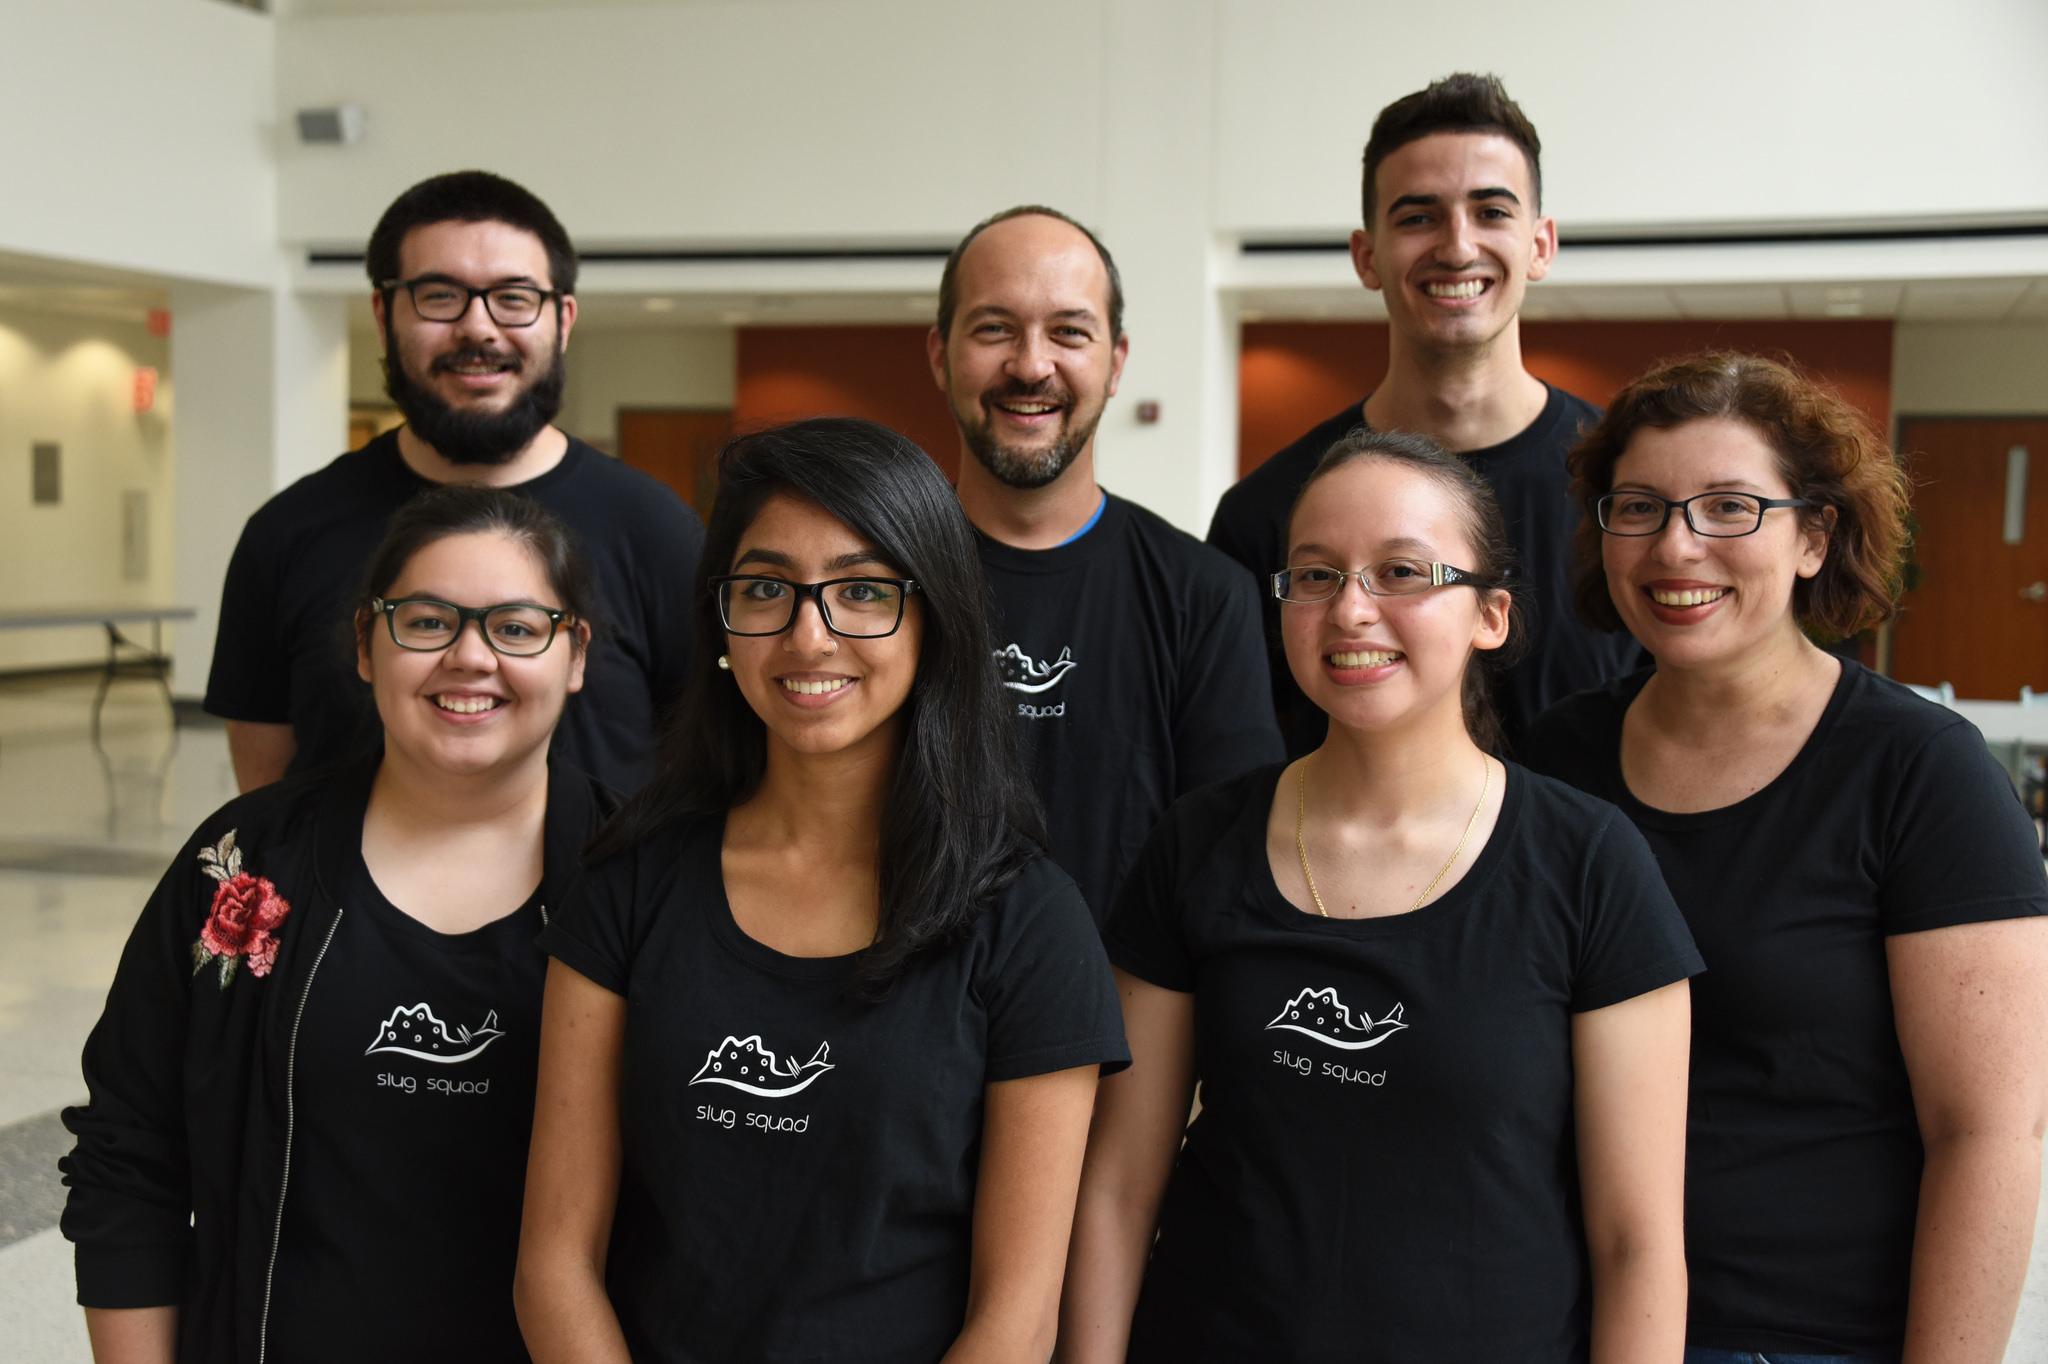 The "Slug Squad" of researchers at Dominican University's Behavioral Neuroscience lab. (Courtesy Dominican University)